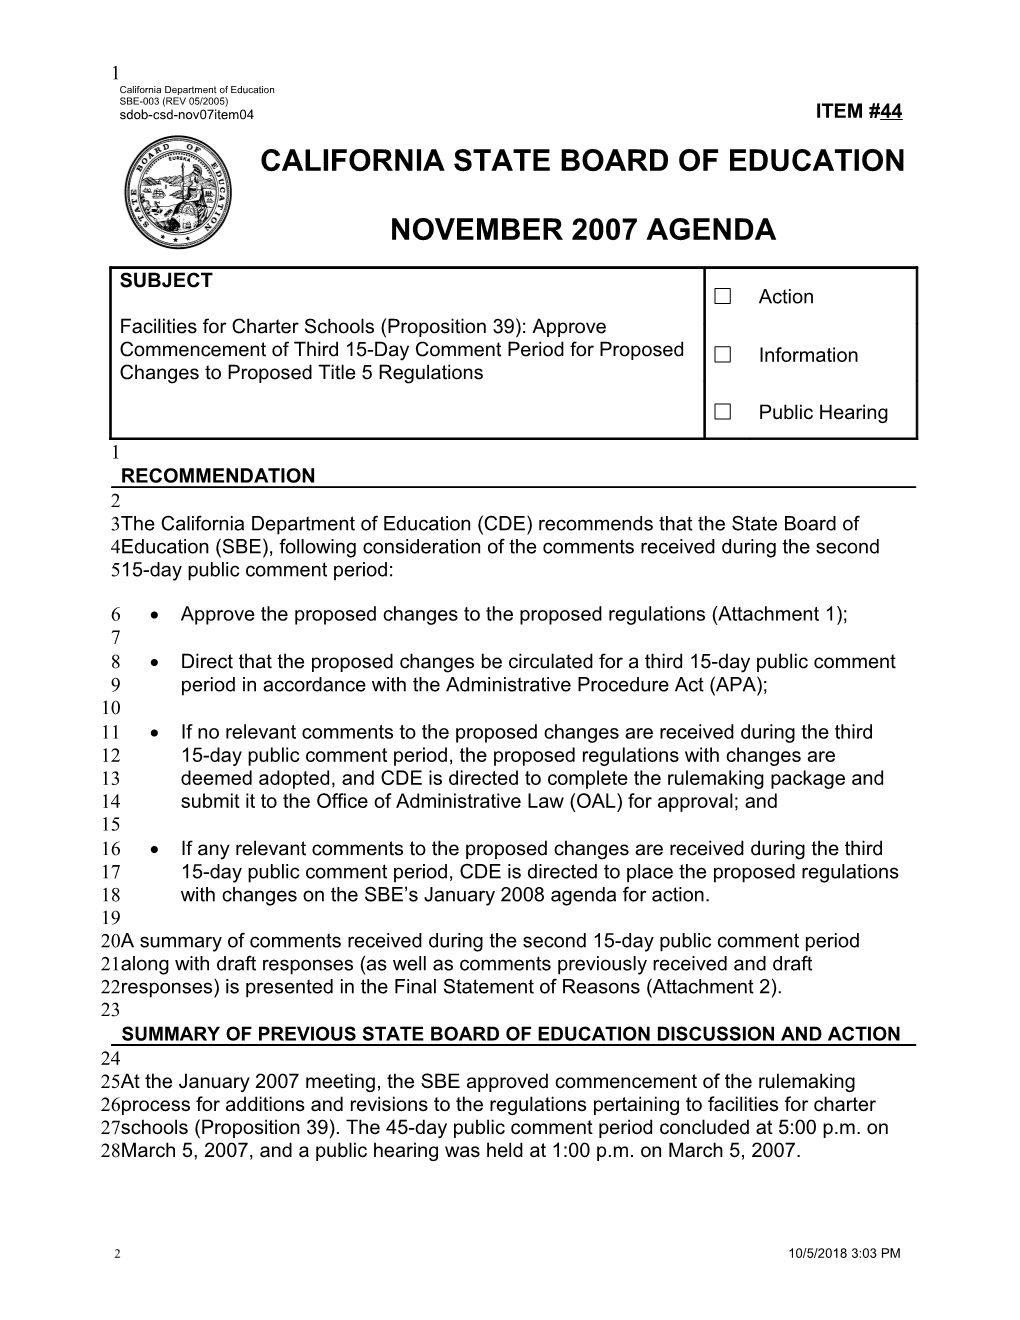 November 2007 Agenda Item 44 - Meeting Agendas (CA State Board of Education)